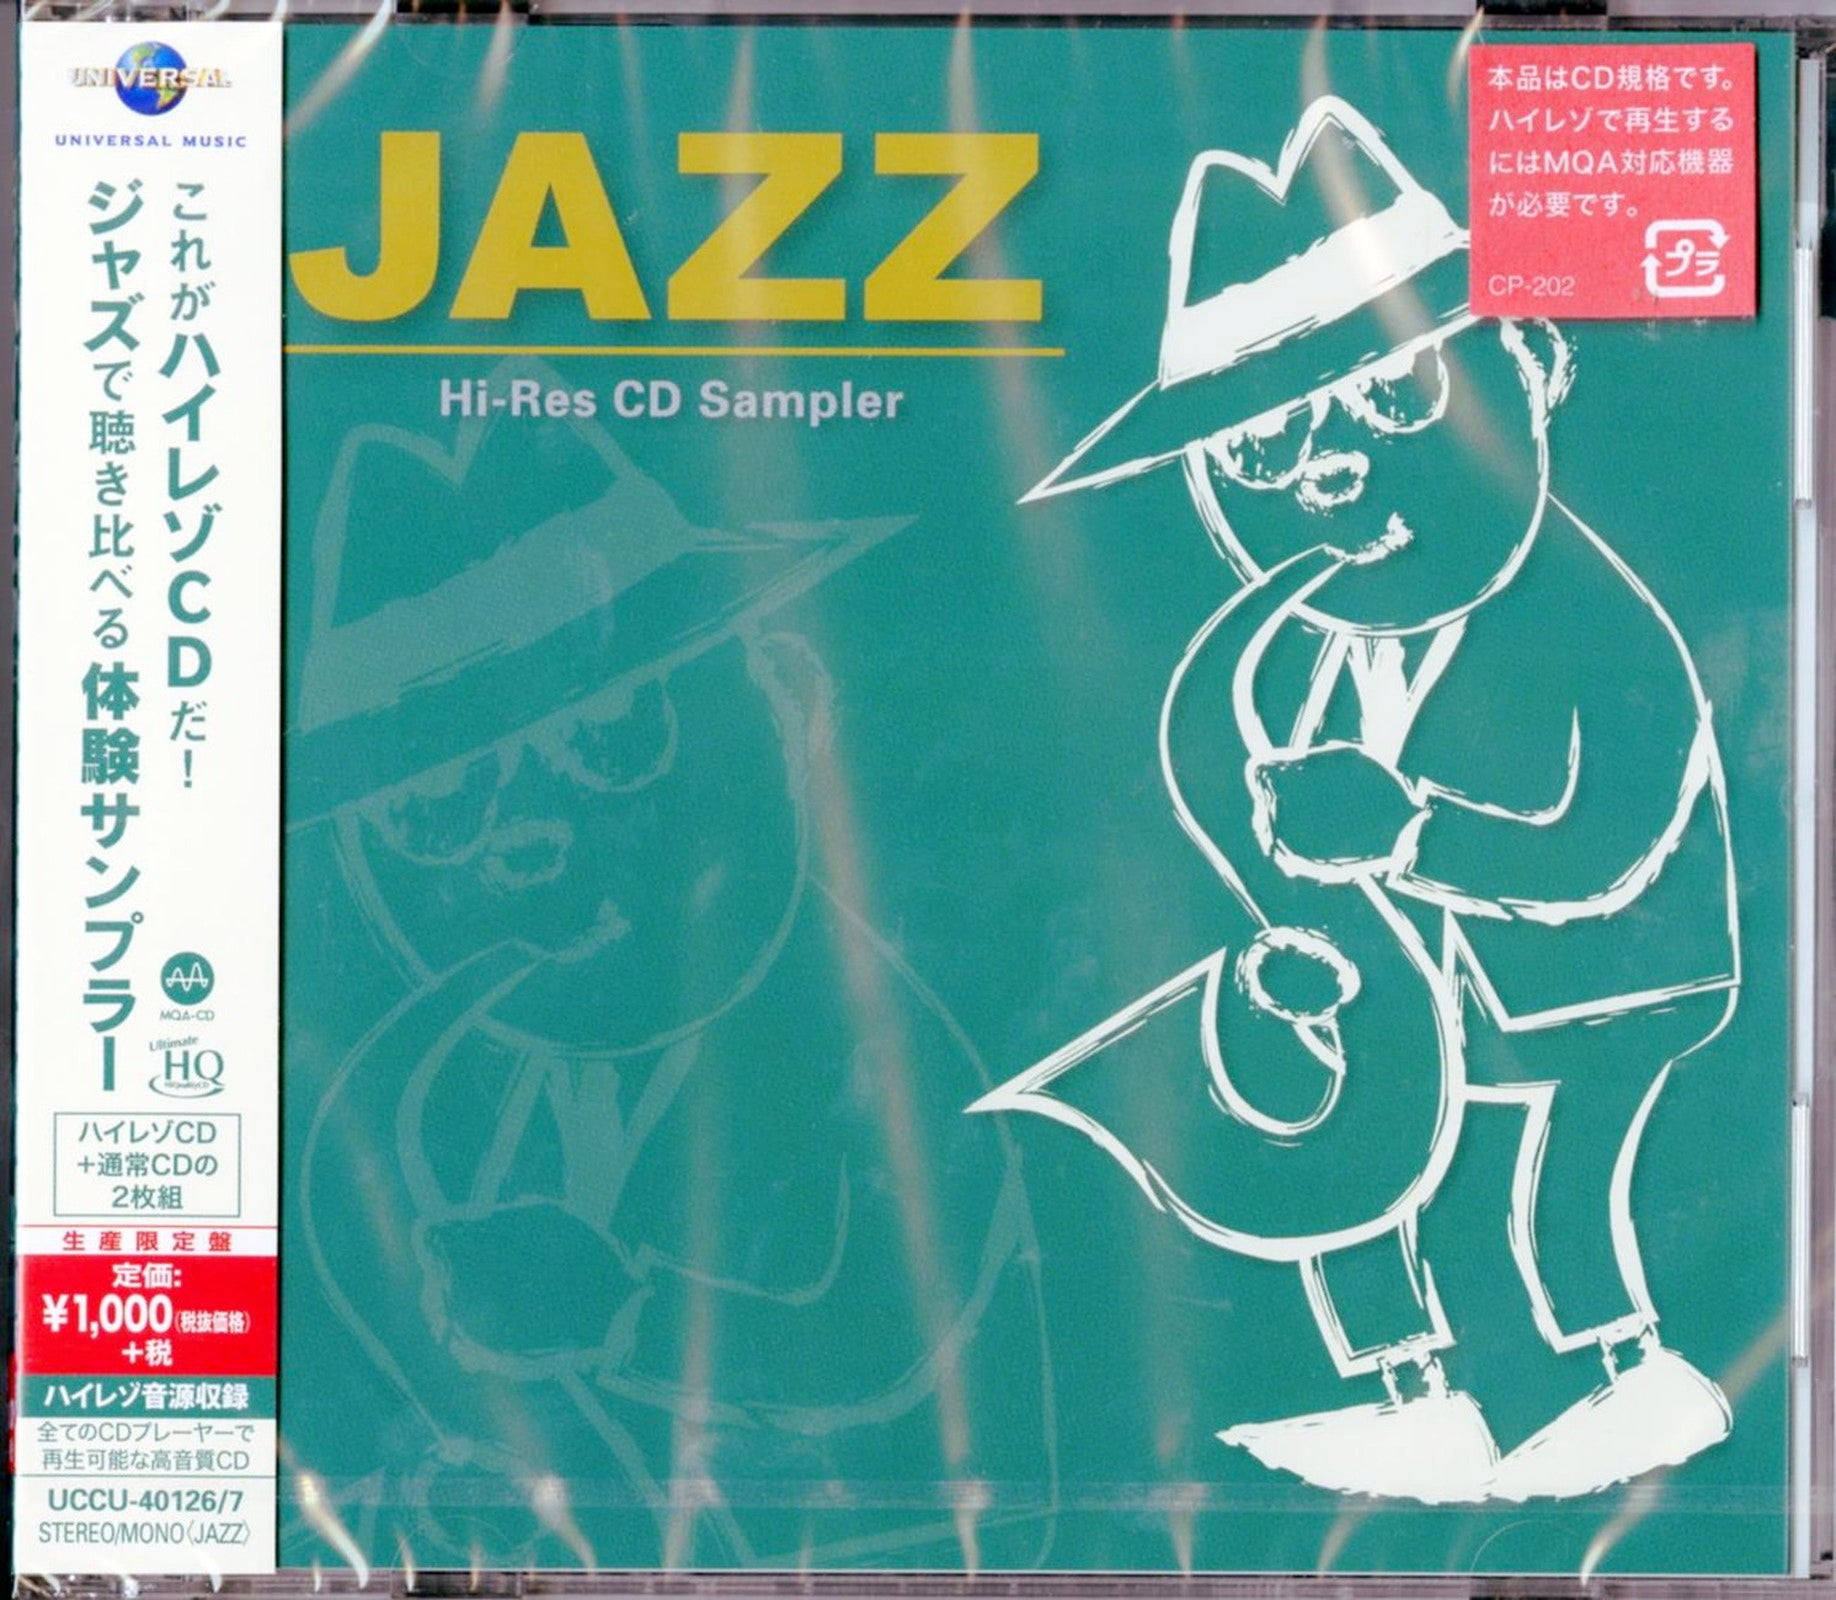 V.A. - Mqa-Cd Jazz Sampler - Japan UHQCD+CD Limited Edition – CDs 